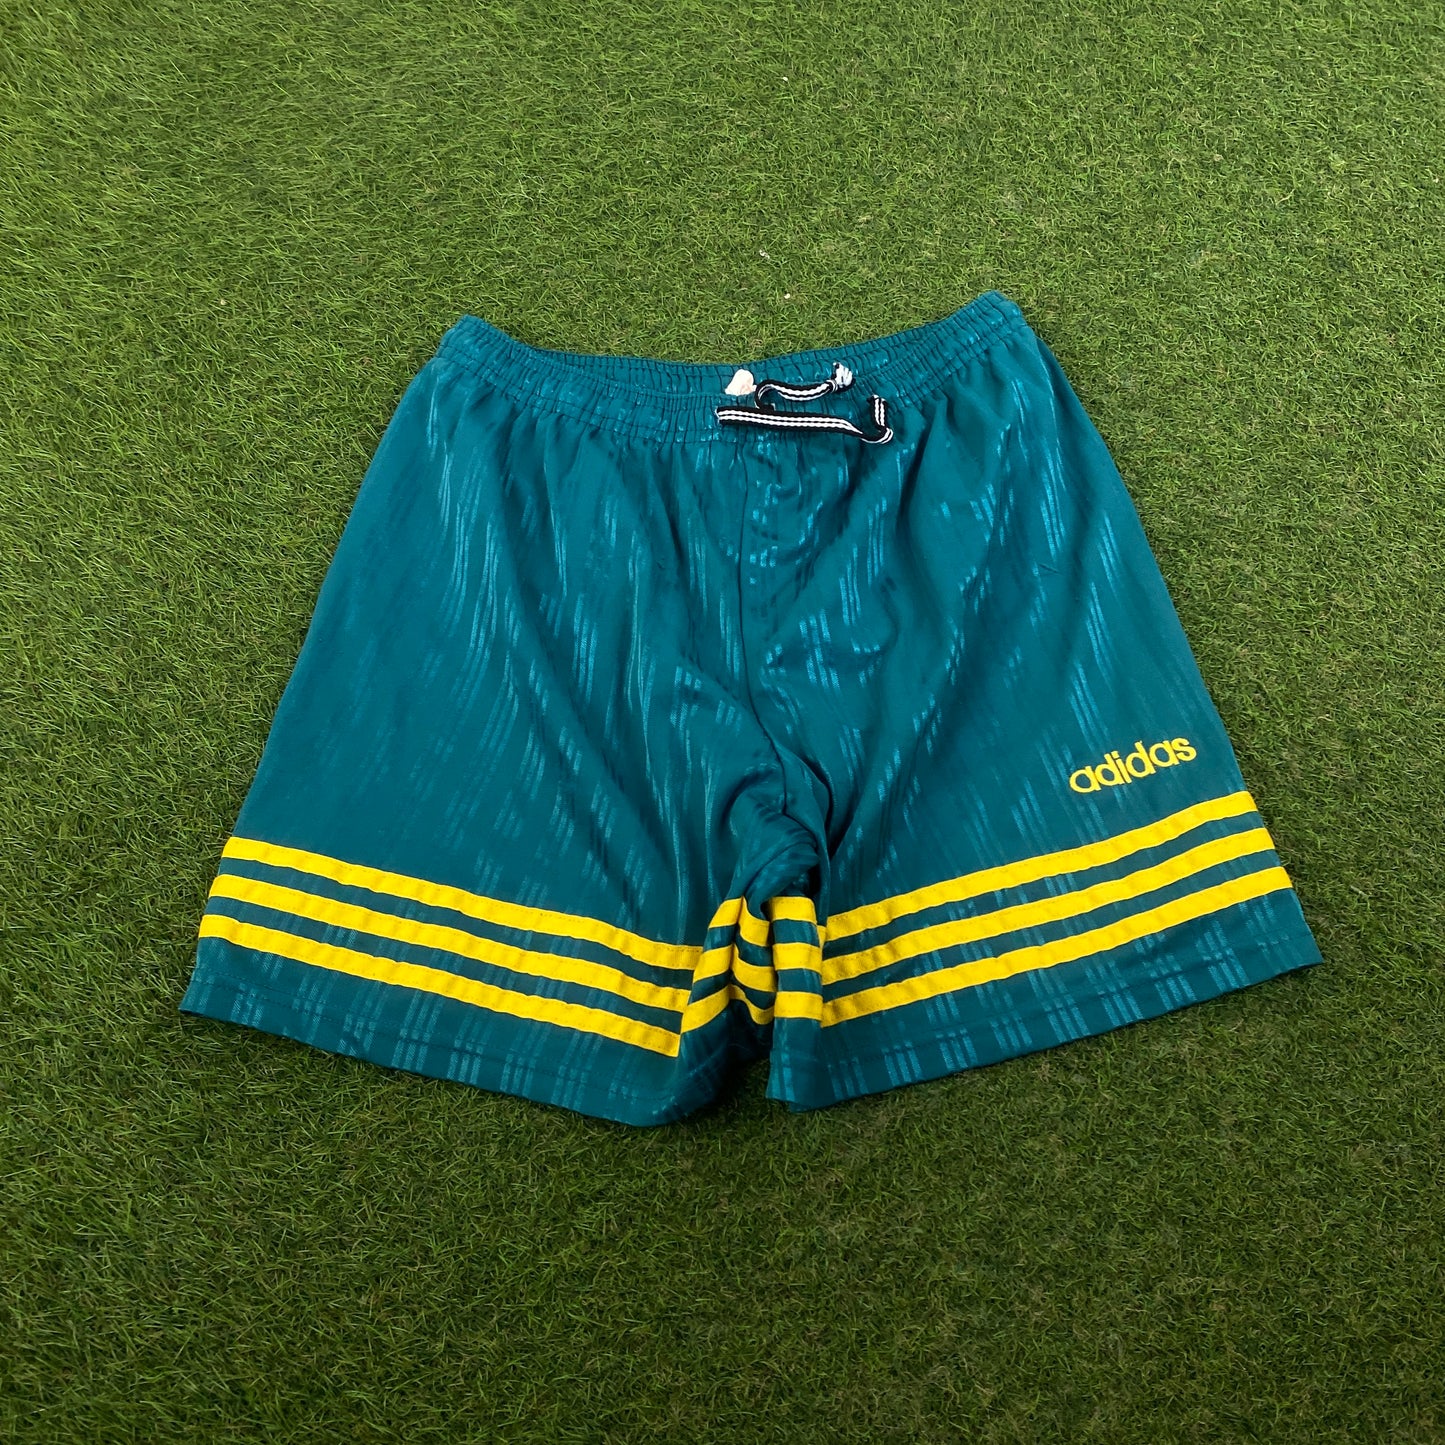 90s Adidas Football Shorts Green Medium